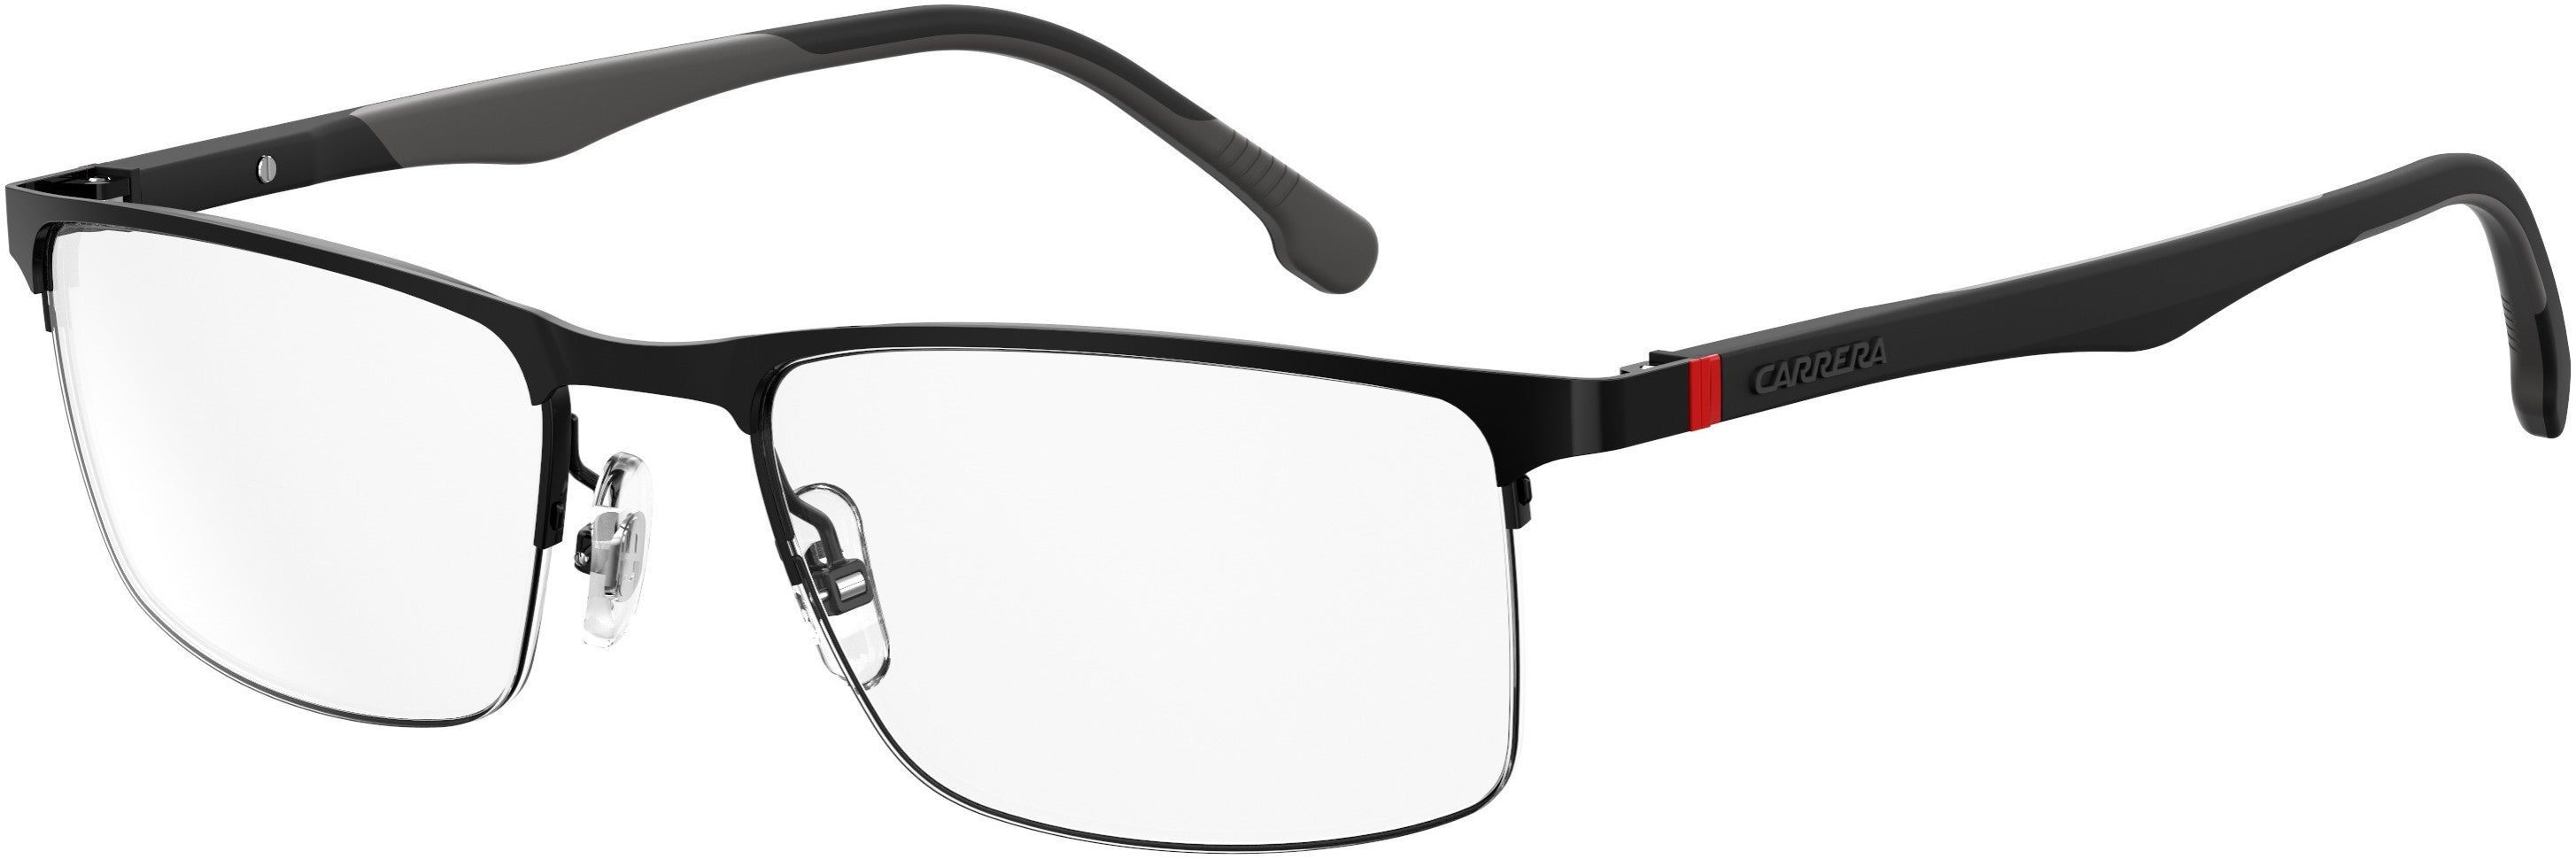  Carrera 8843 Rectangular Eyeglasses 0807-0807  Black (00 Demo Lens)